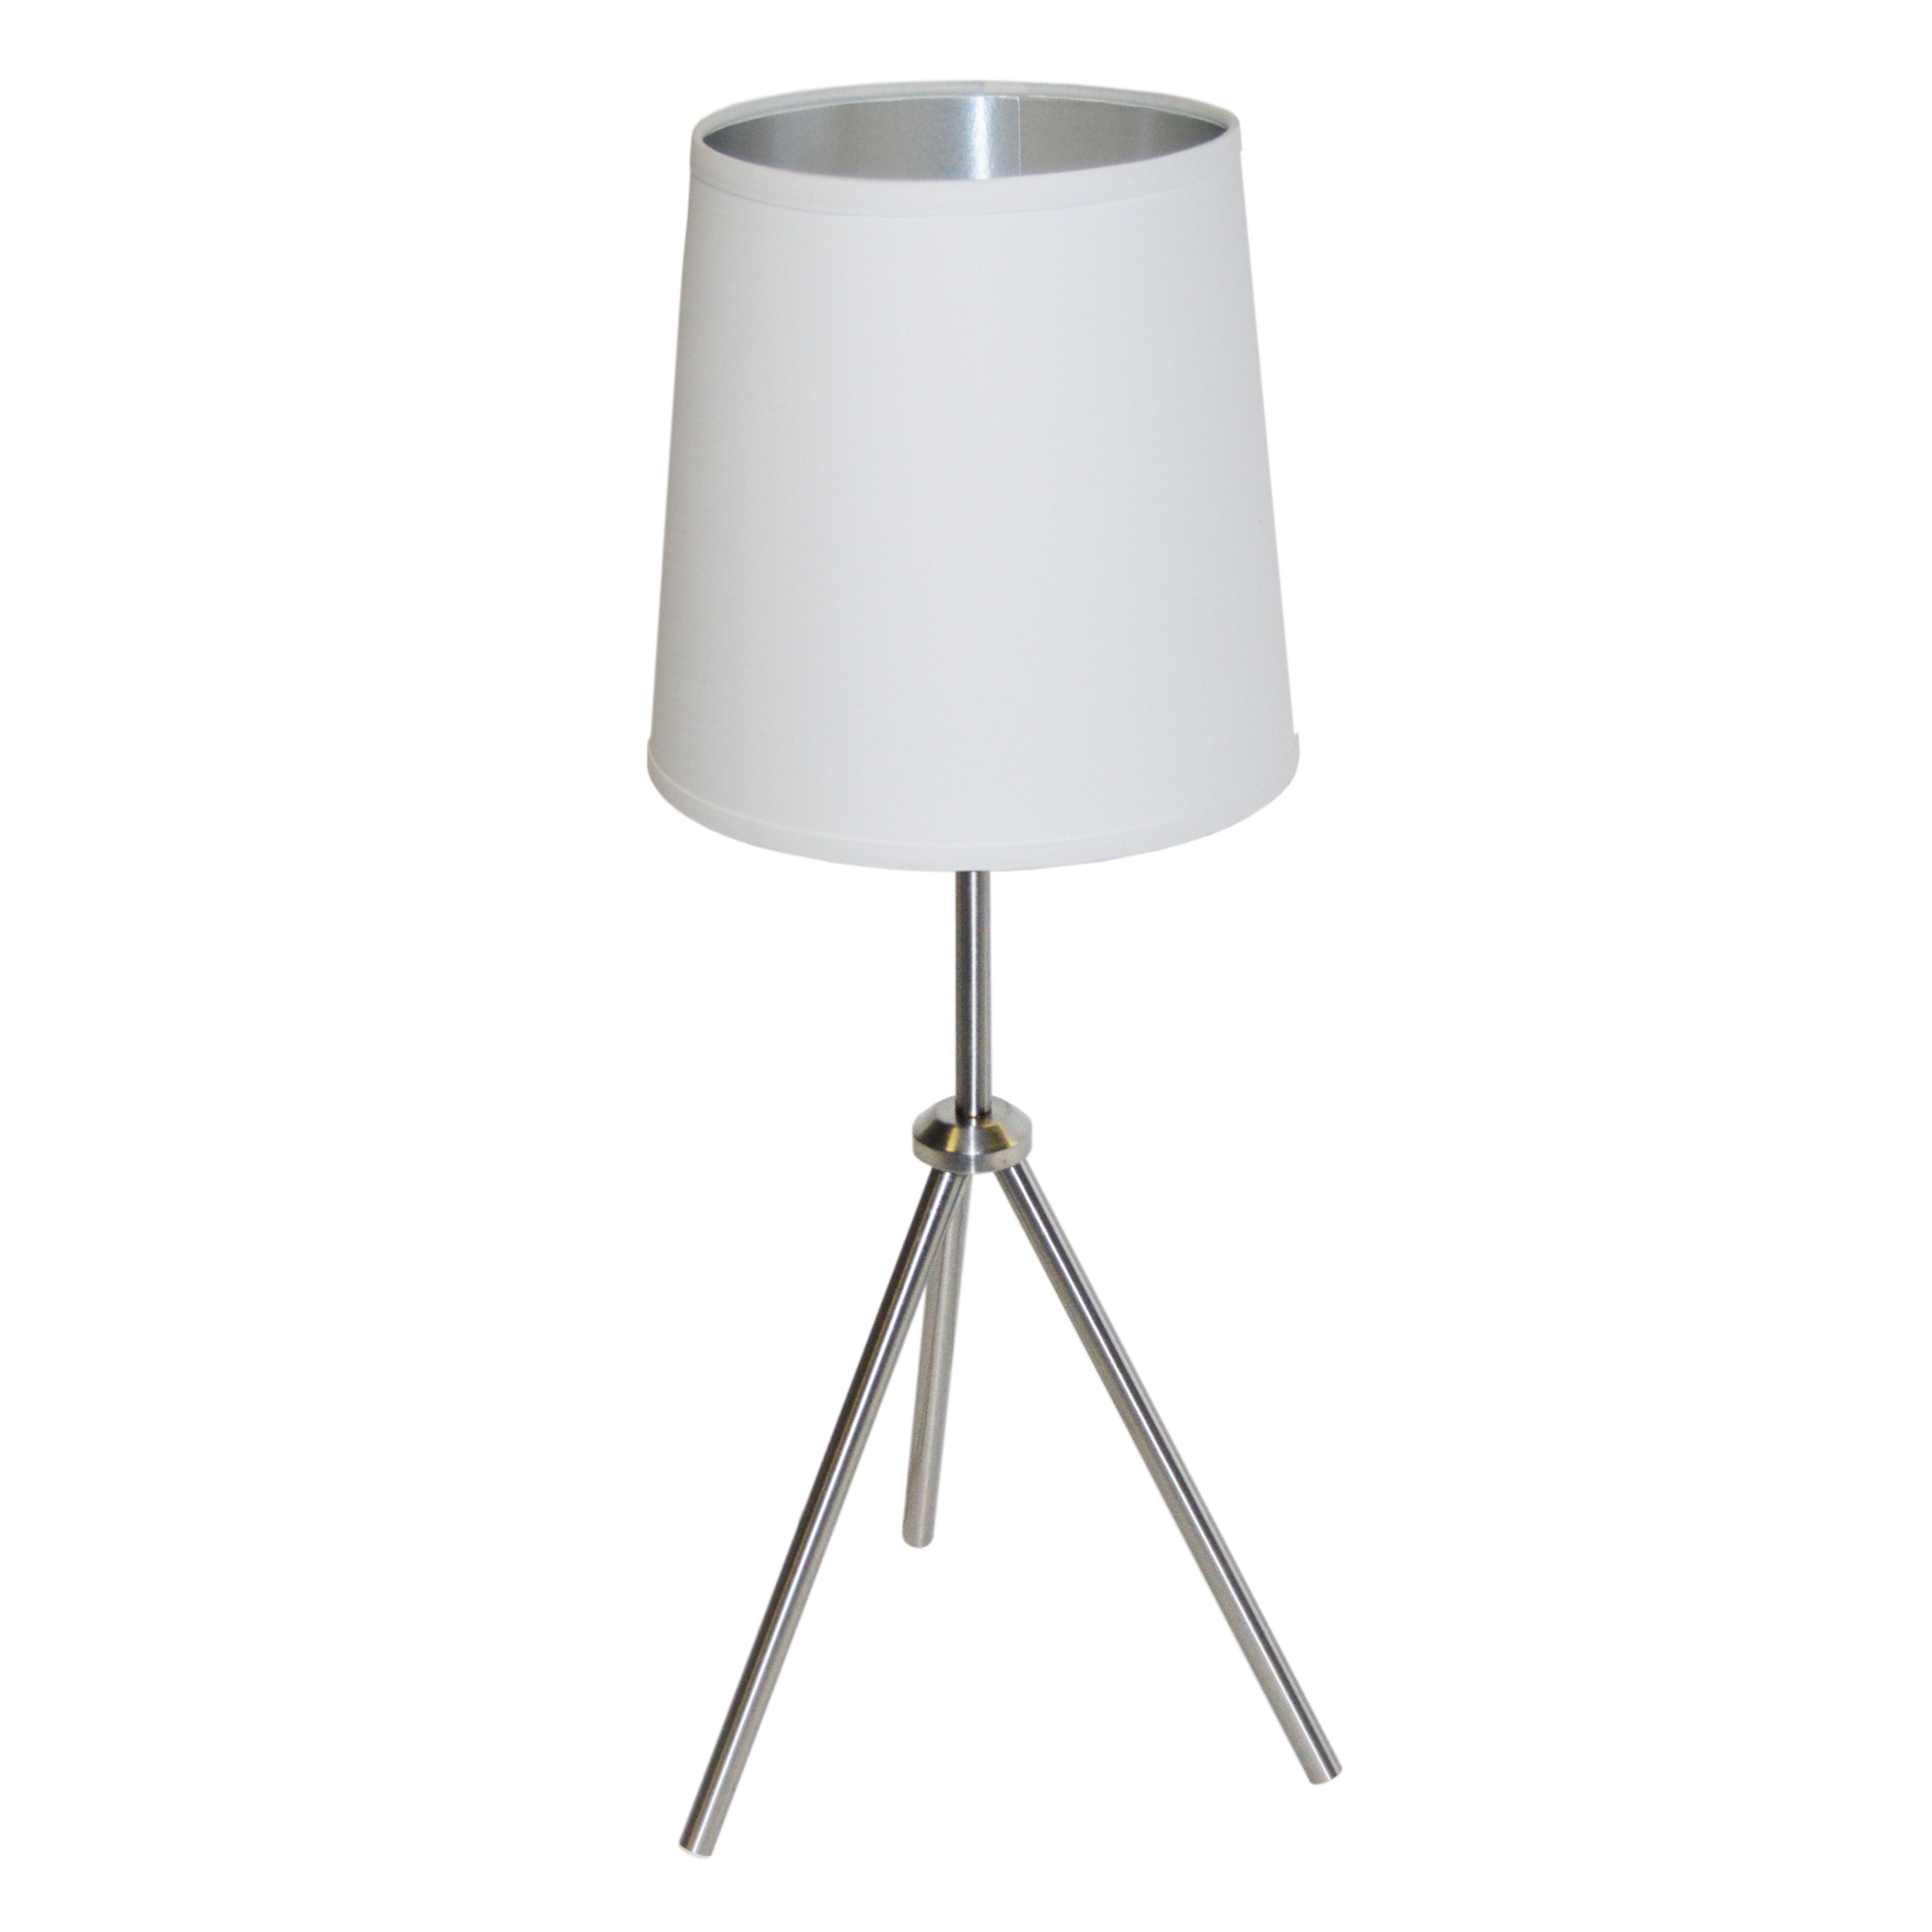 OVER SIZED DRUM Table lamp Chrome - OD3T-S-691-SC | DAINOLITE